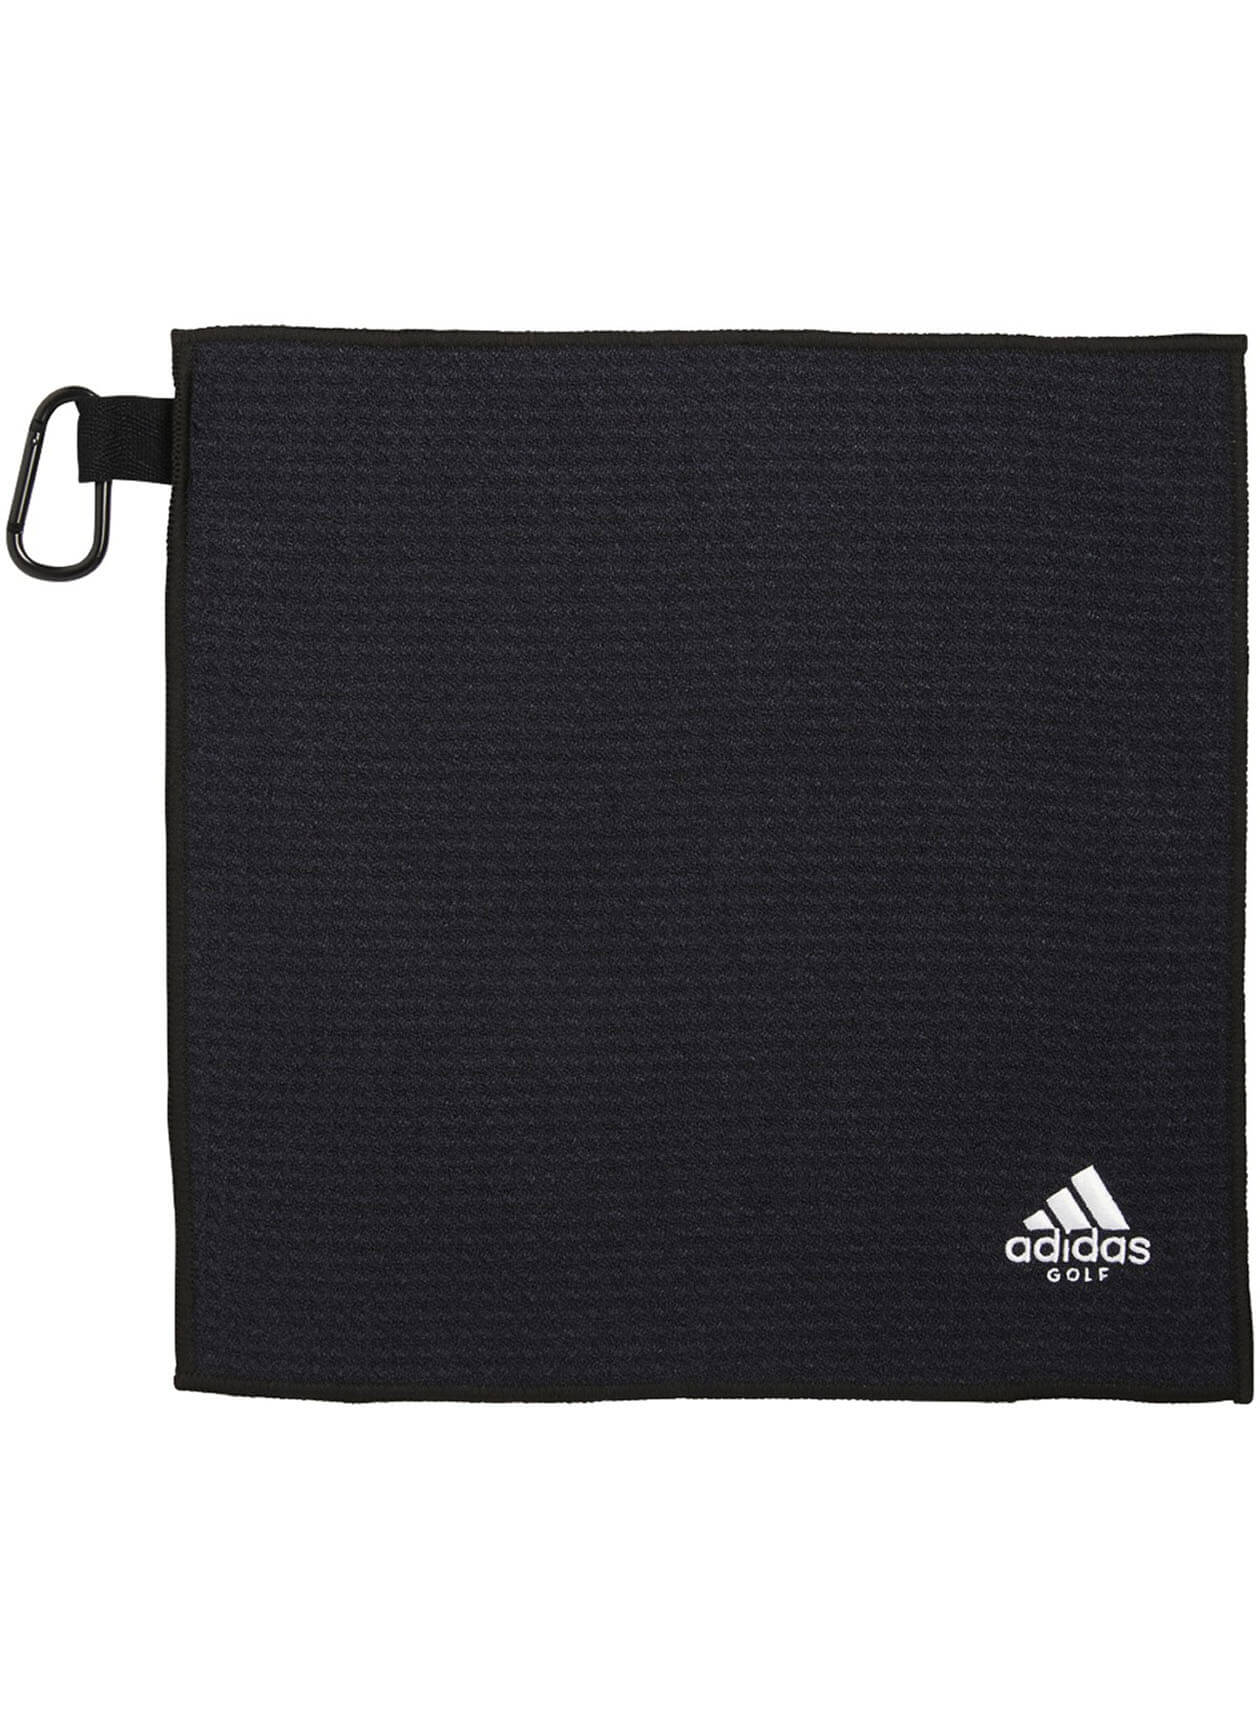 Adidas AD308 - Golf Microfiber Cart Towel